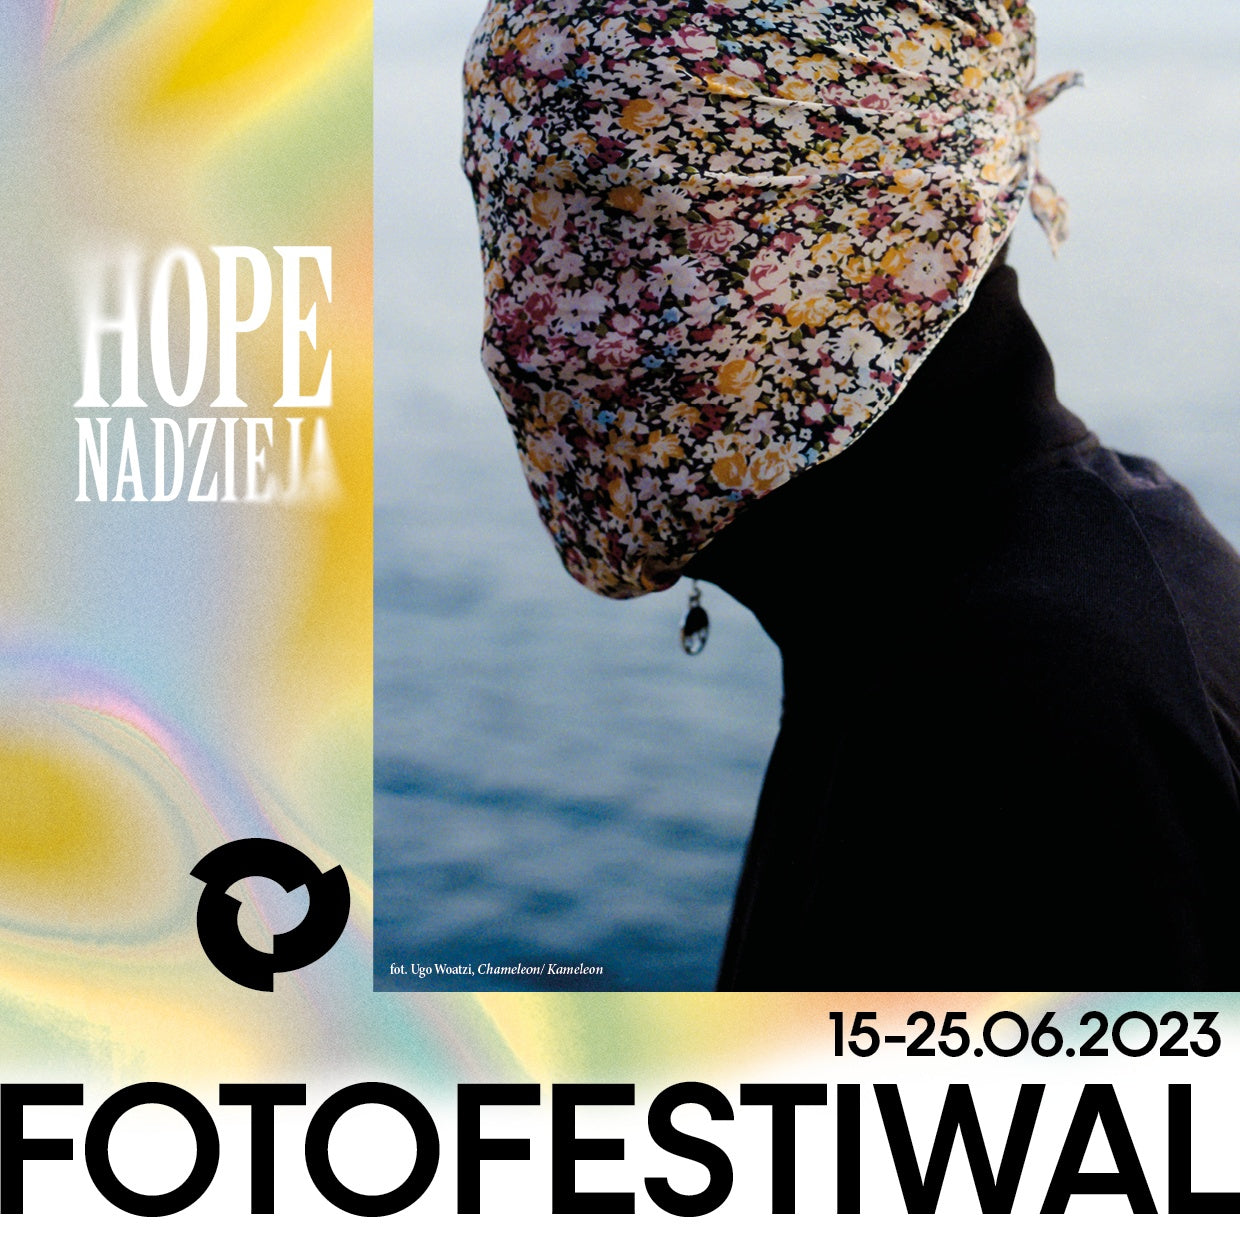 Fotofestiwal Łódź 15-25.06.2023